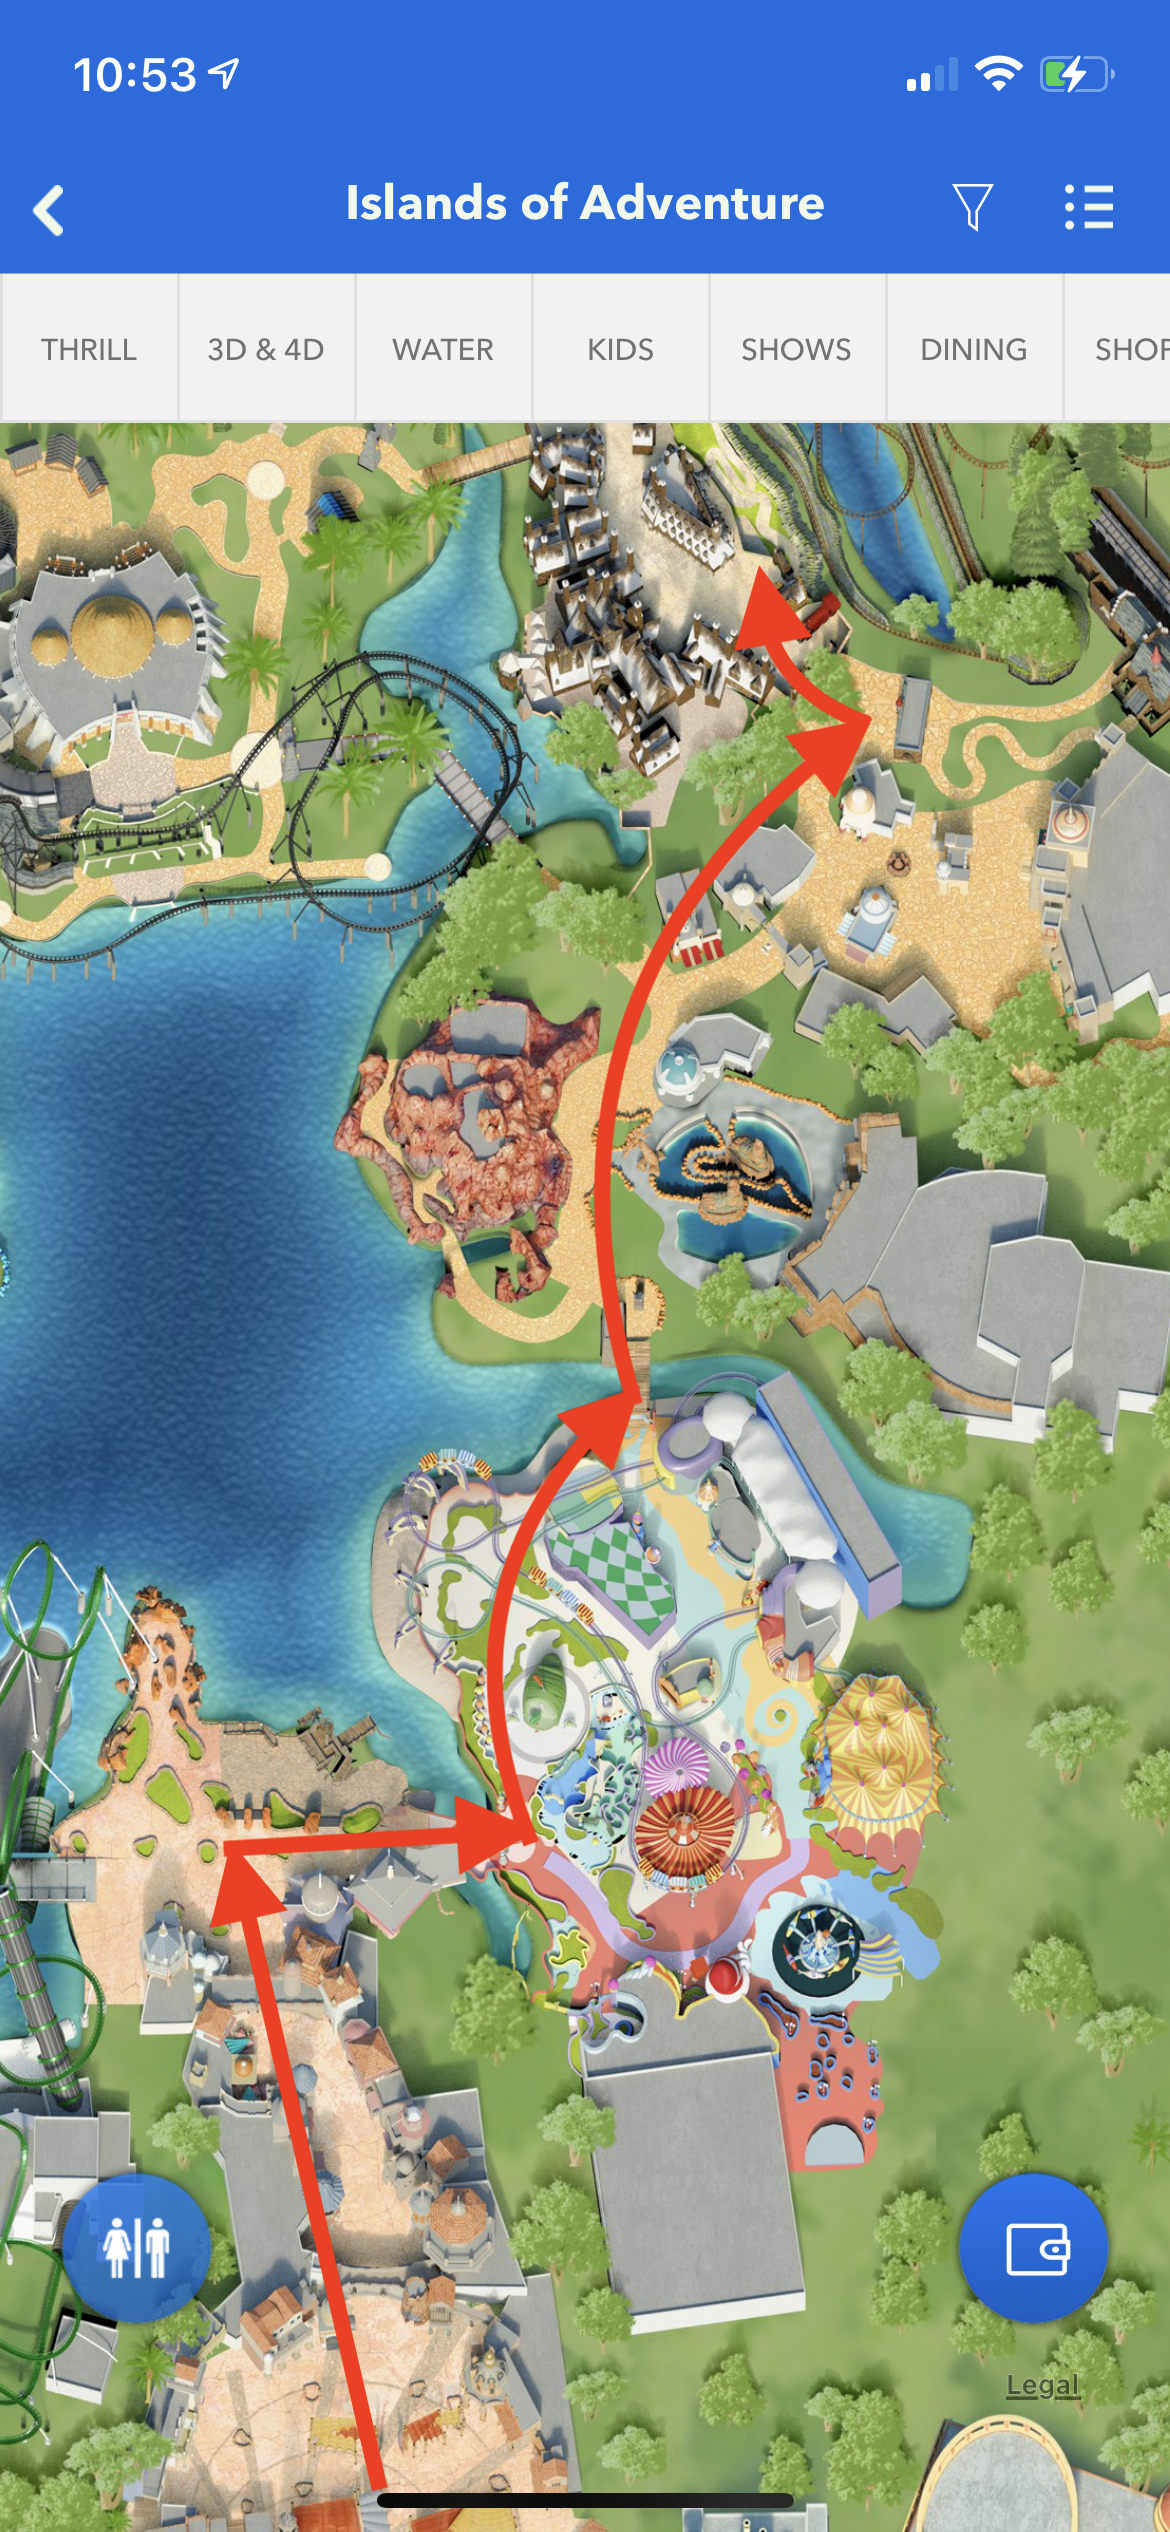 uor 2021 universal orlando islands of adventure velocicoaster queue line  park map 